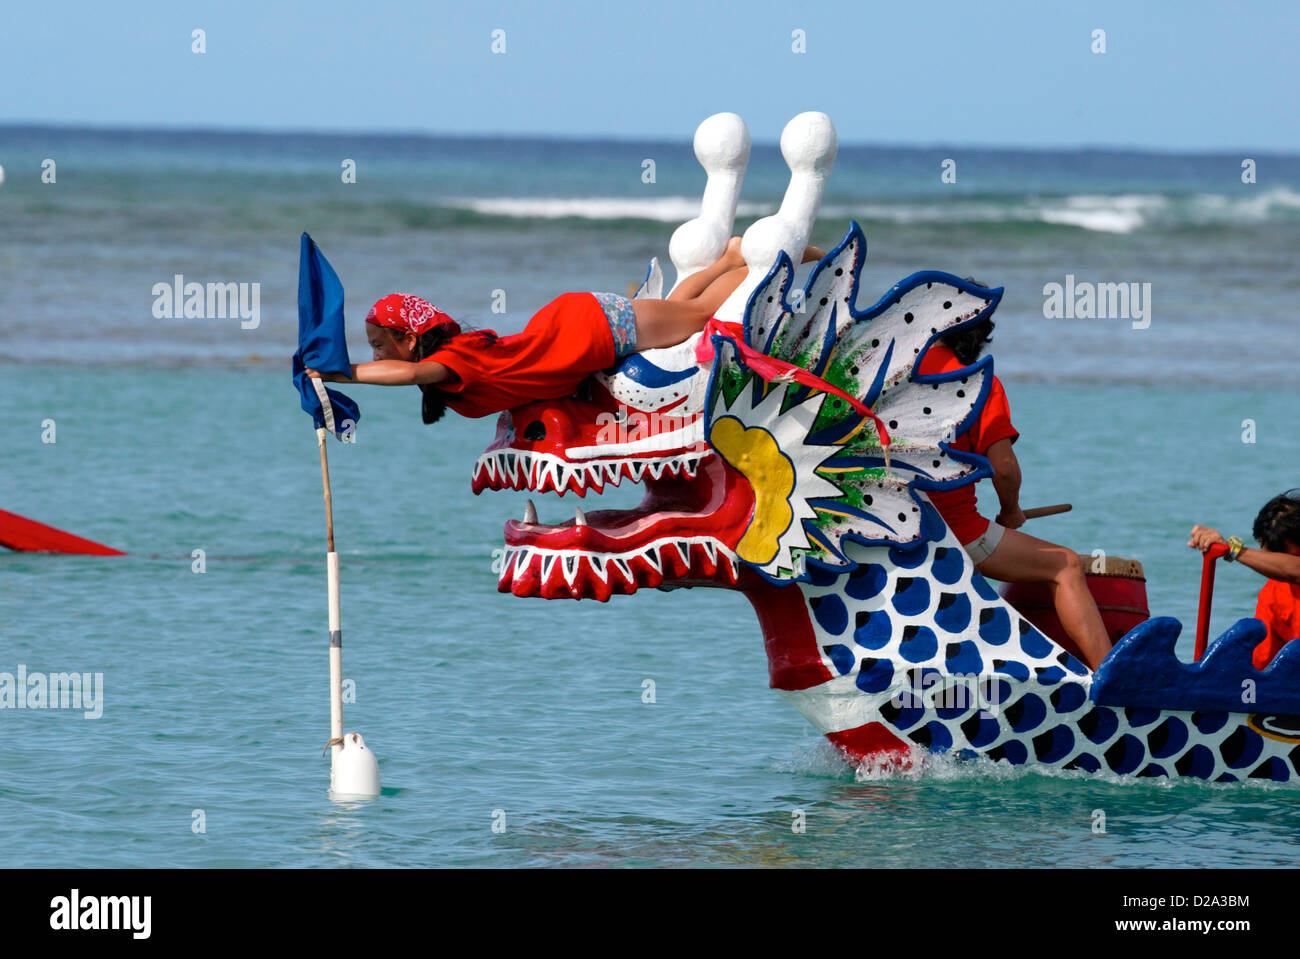 Honolulu Hawaii Drapeau Dragon Boat Race Festival de bateau-dragon de l'extracteur (Tuen Ng) a débuté en quatrième siècle avant J.C. en Chine 53 Banque D'Images